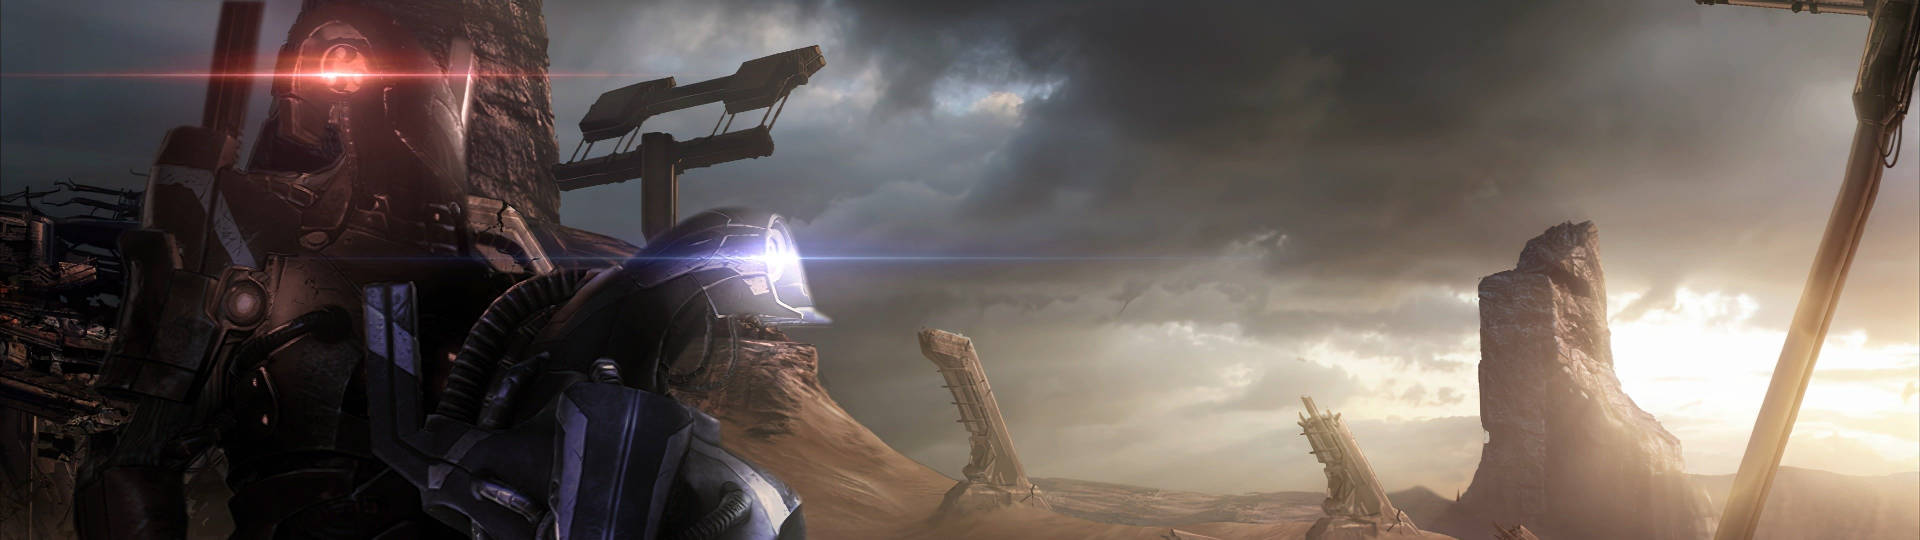 Mass Effect Happy Ending Mod Legendary Edition Audemus slice